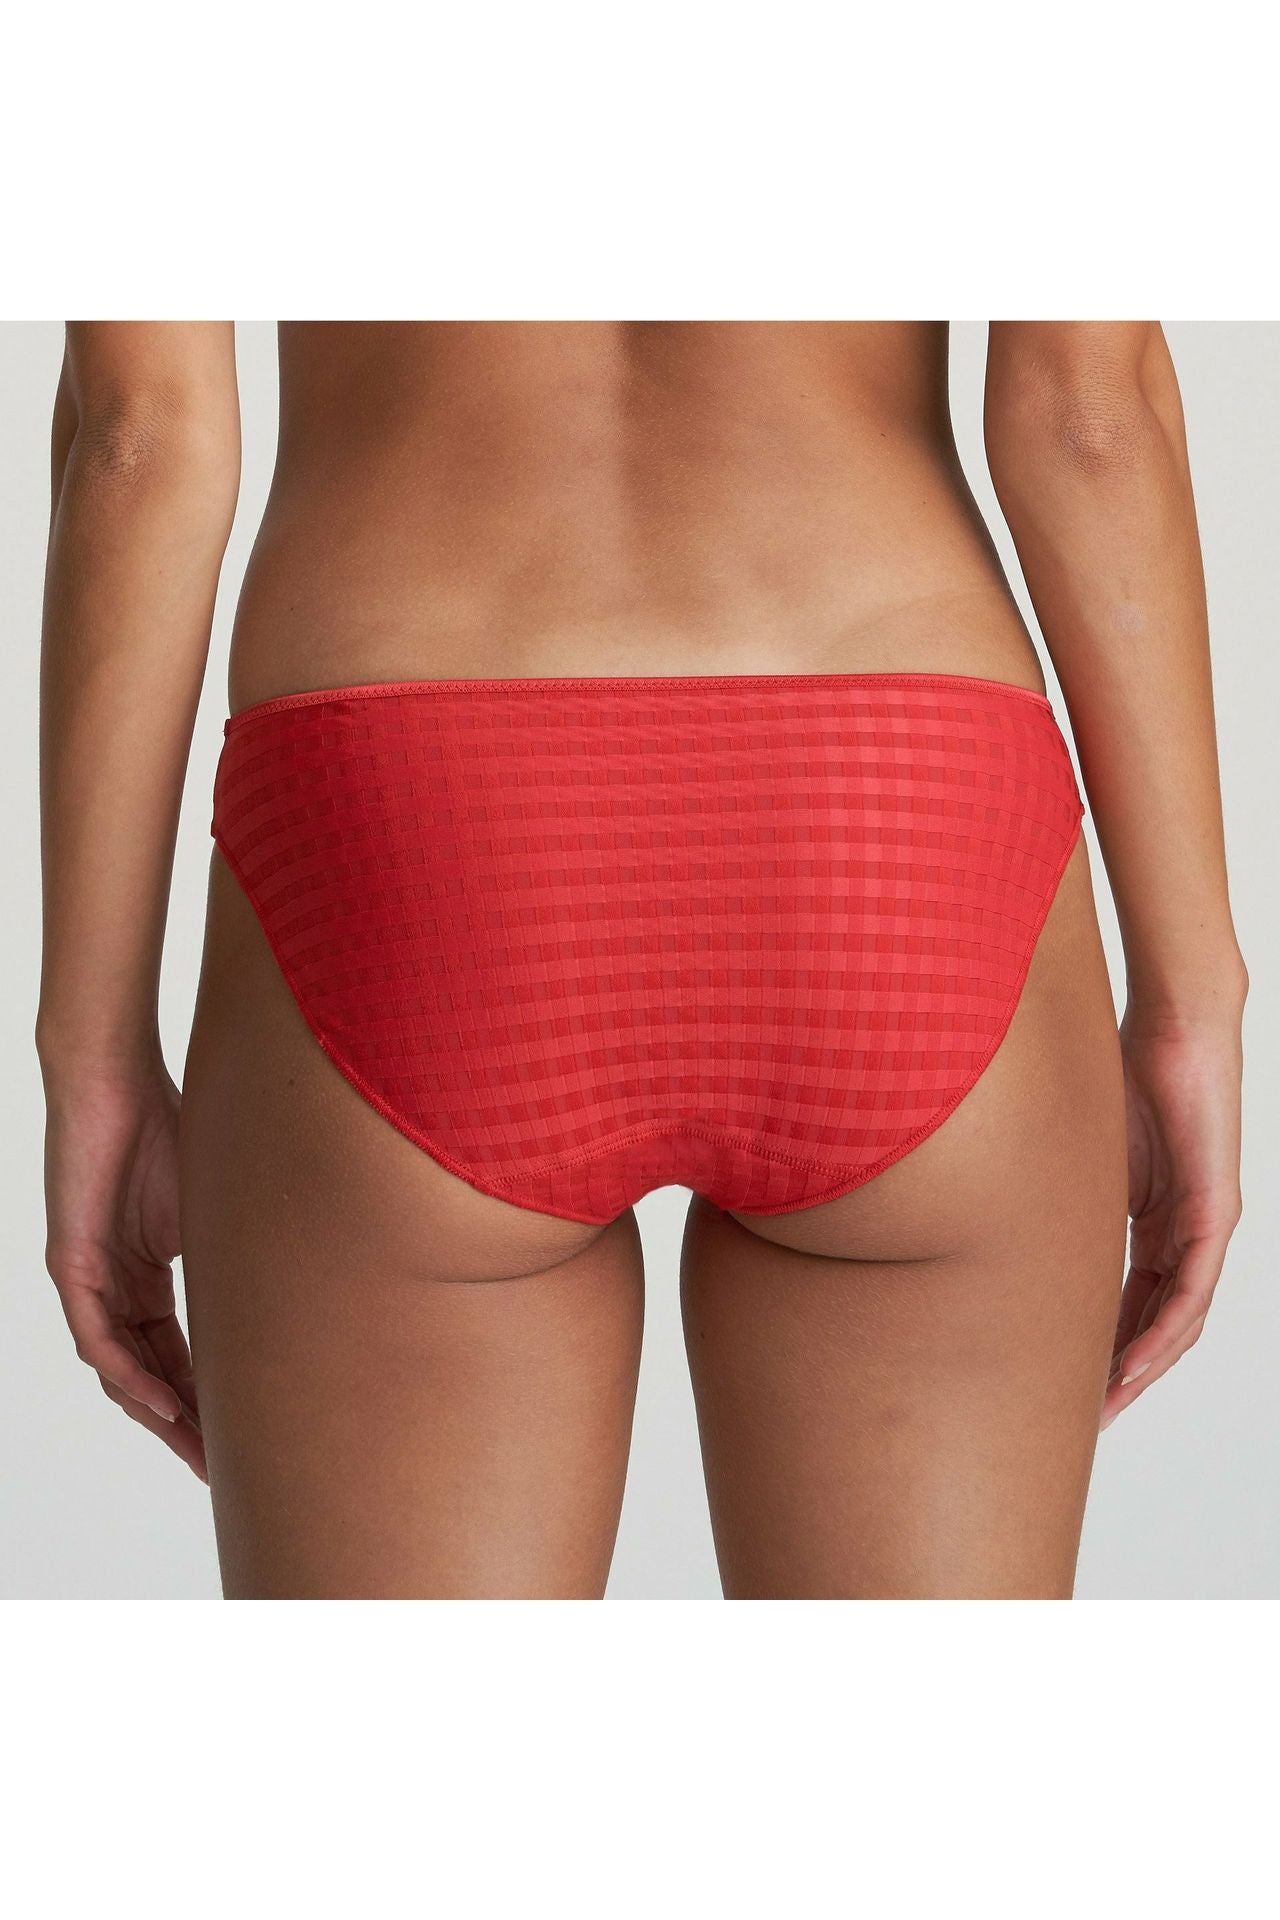 Marie Jo Rio Bikini Panty - Style 0500410, back, scarlet